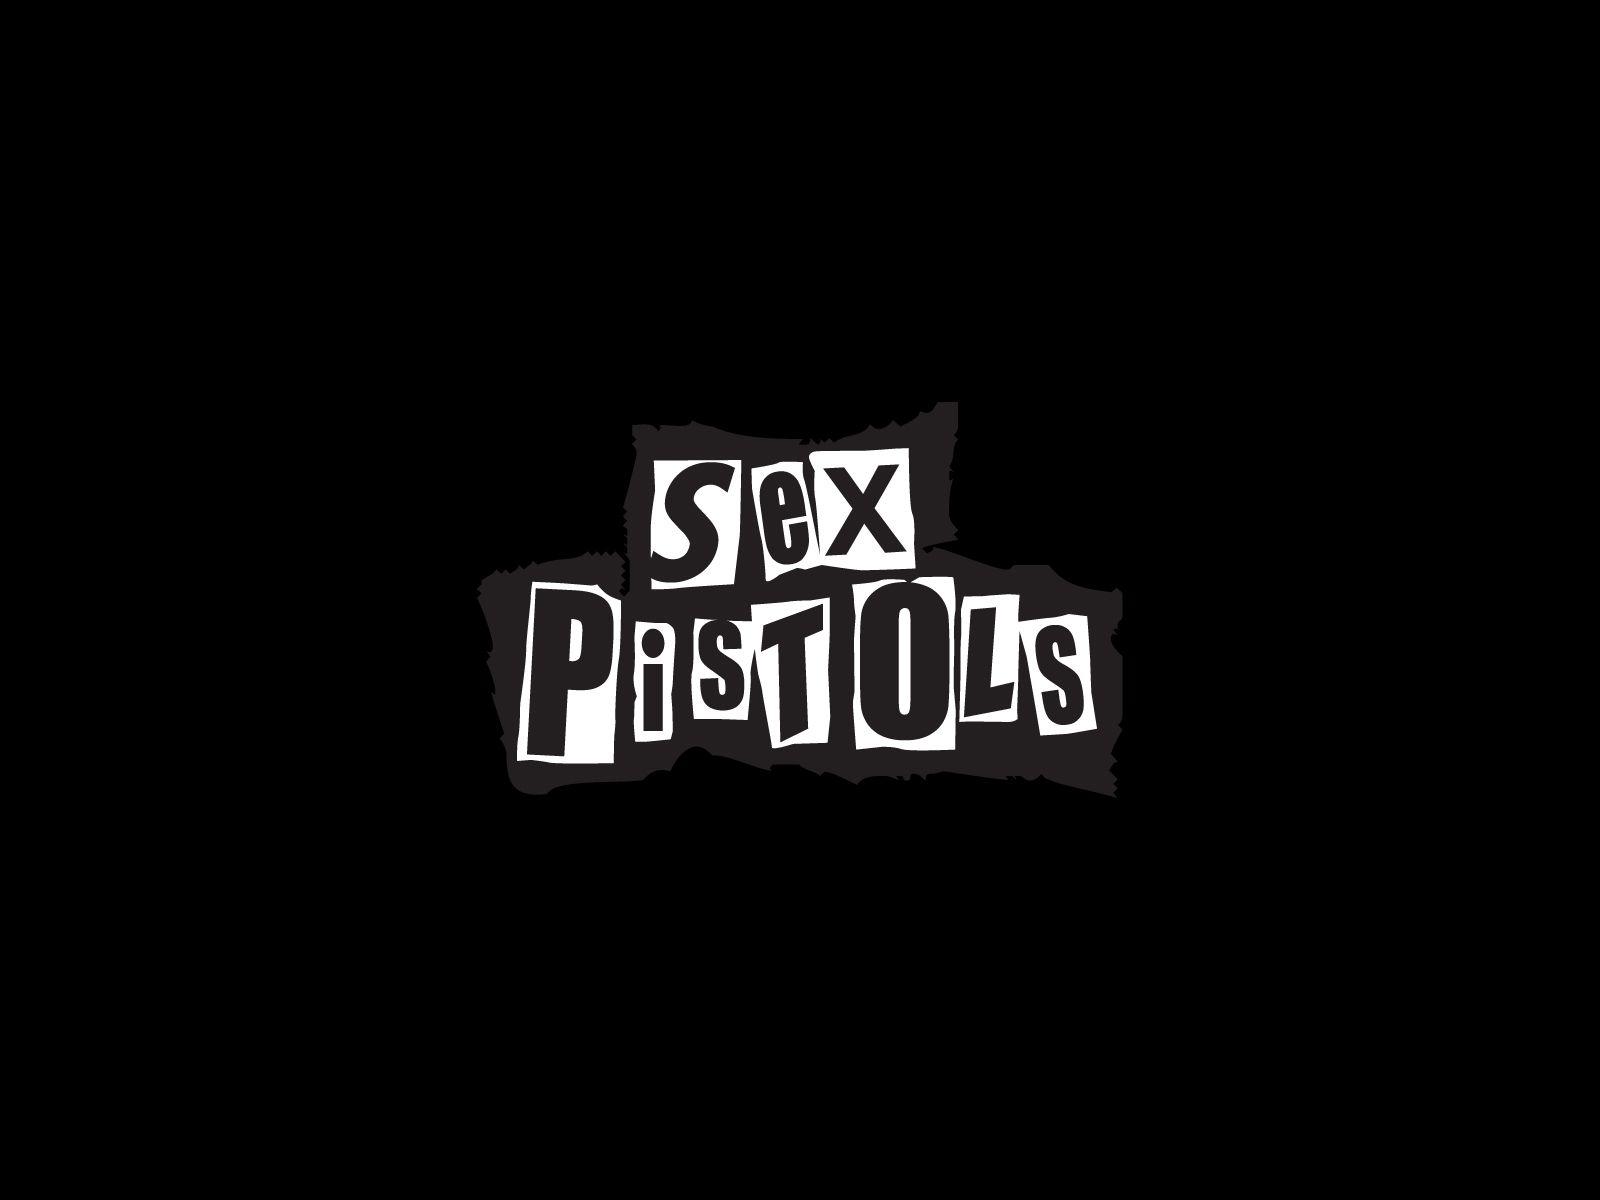 Sex pistols logo and wallpaper. Band logos band logos, metal